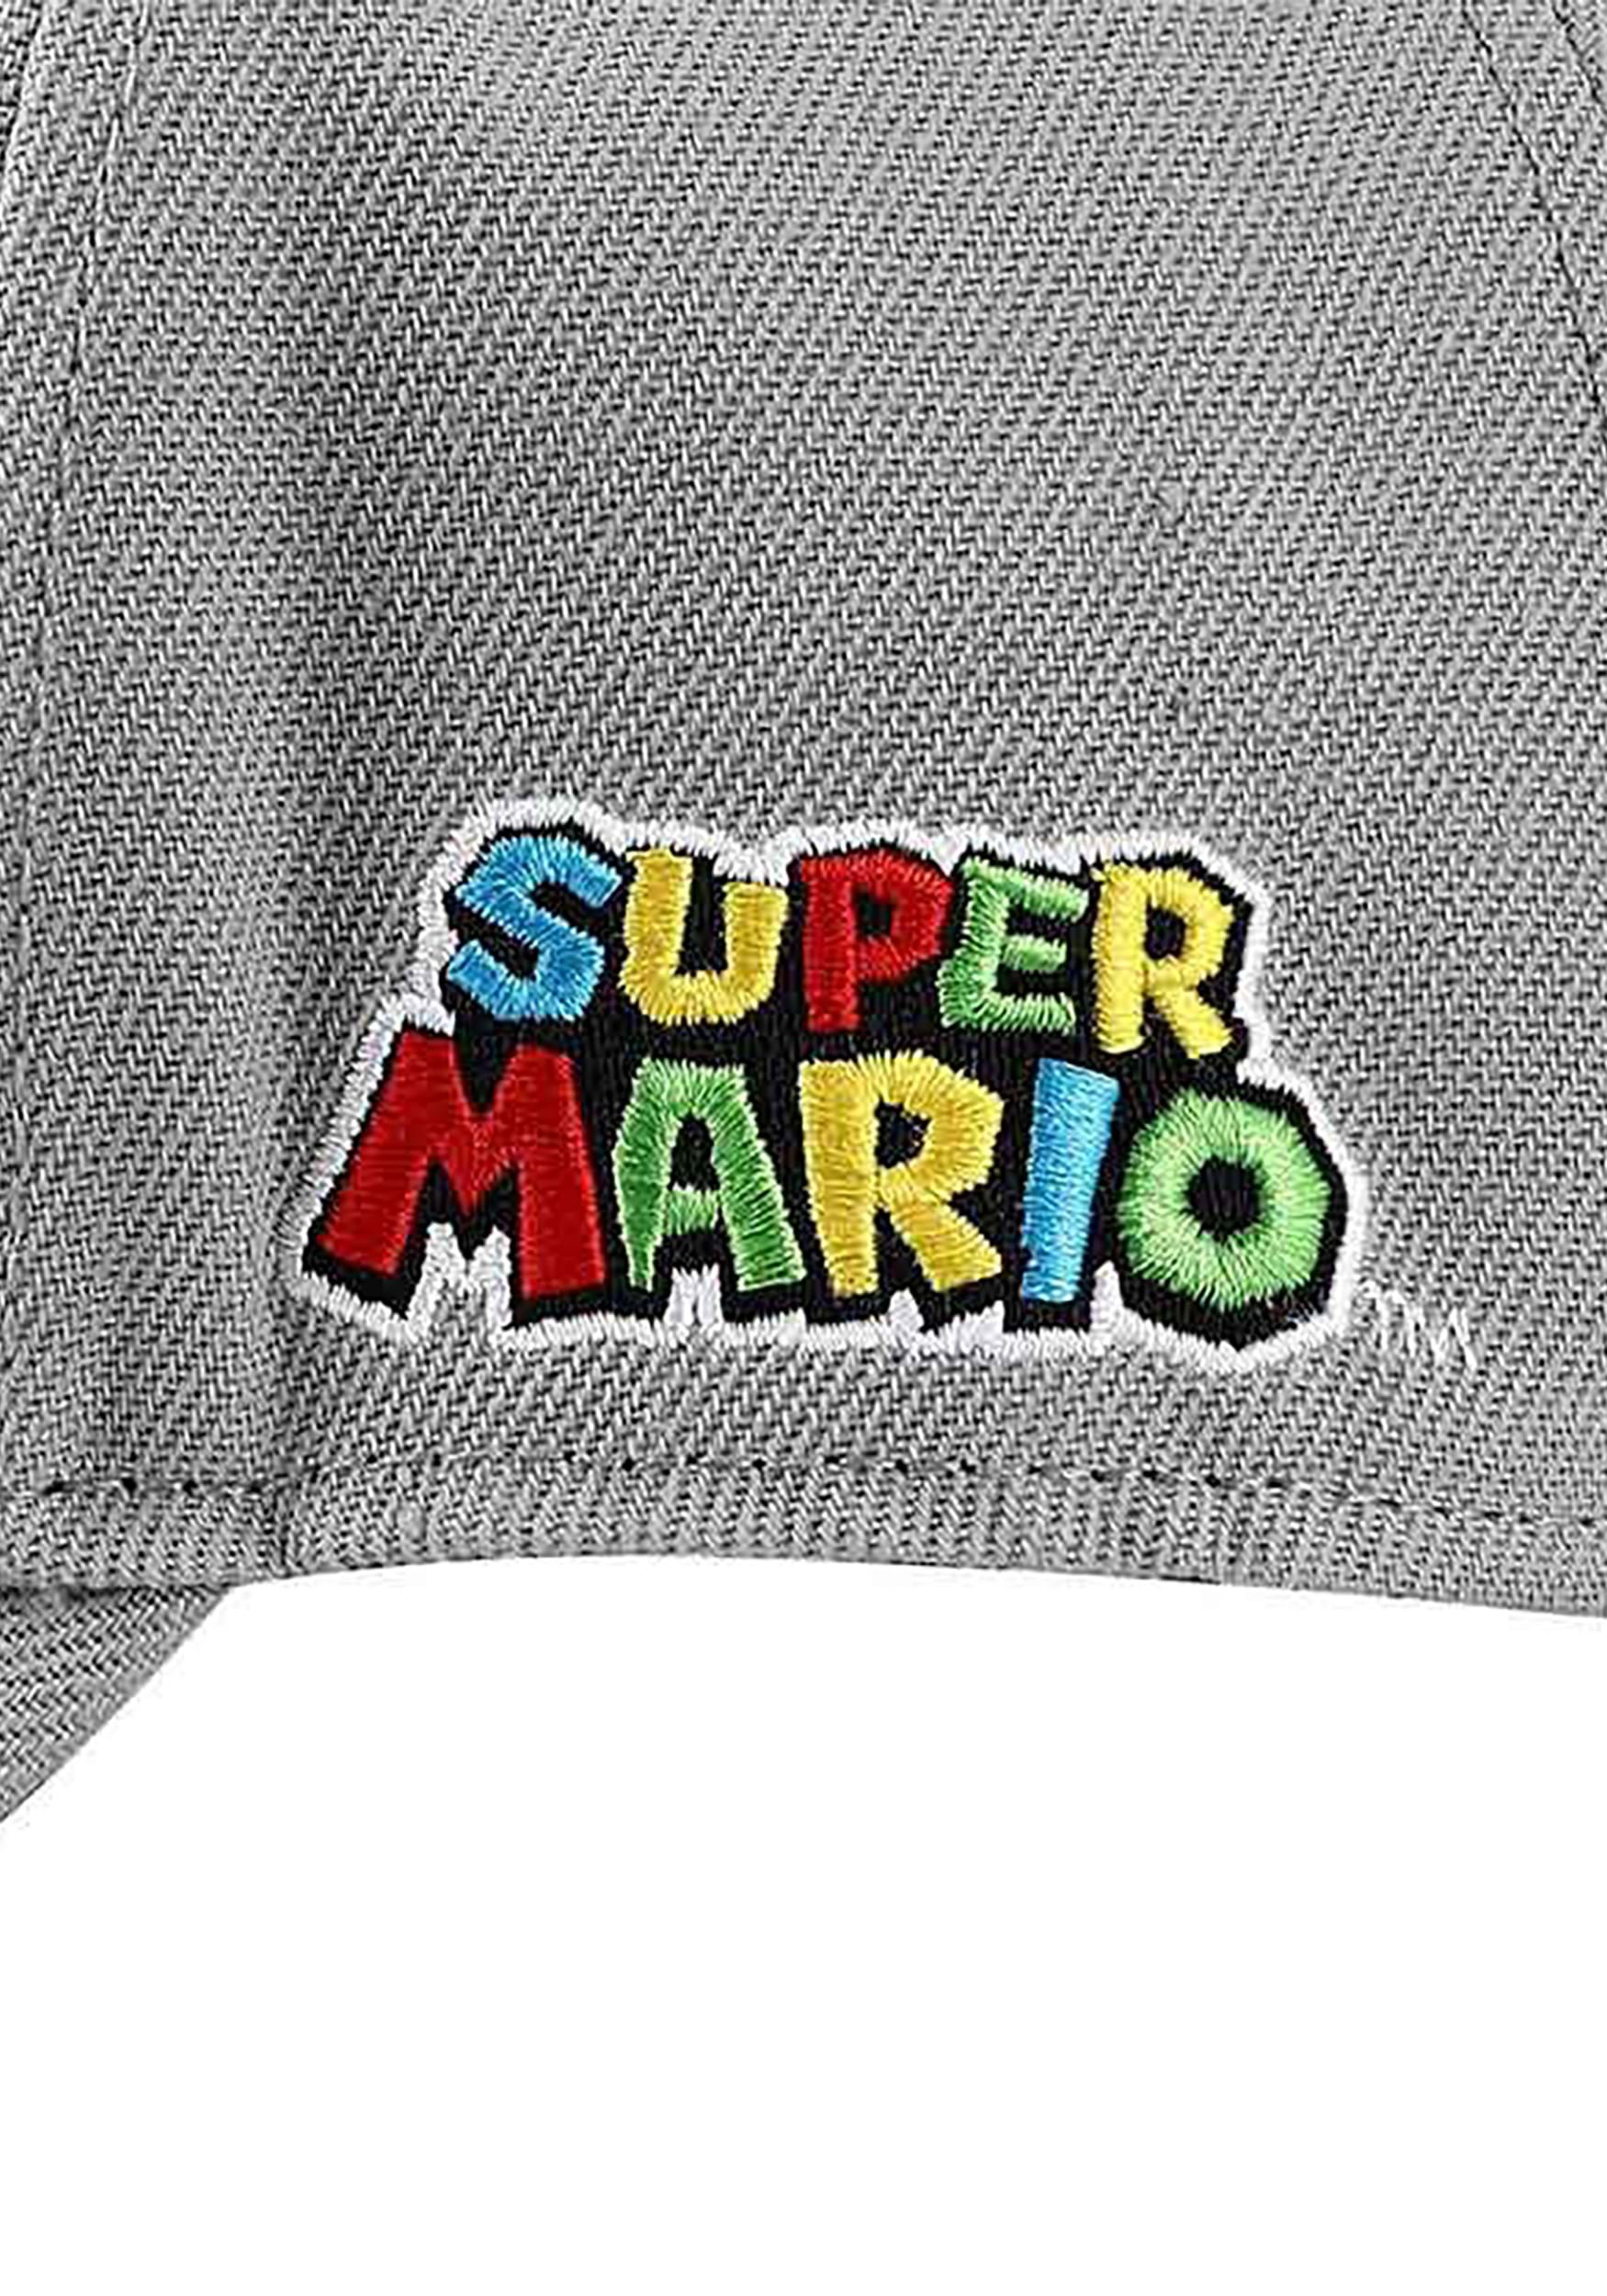 Super Mario Mushroom Kingdom Hat